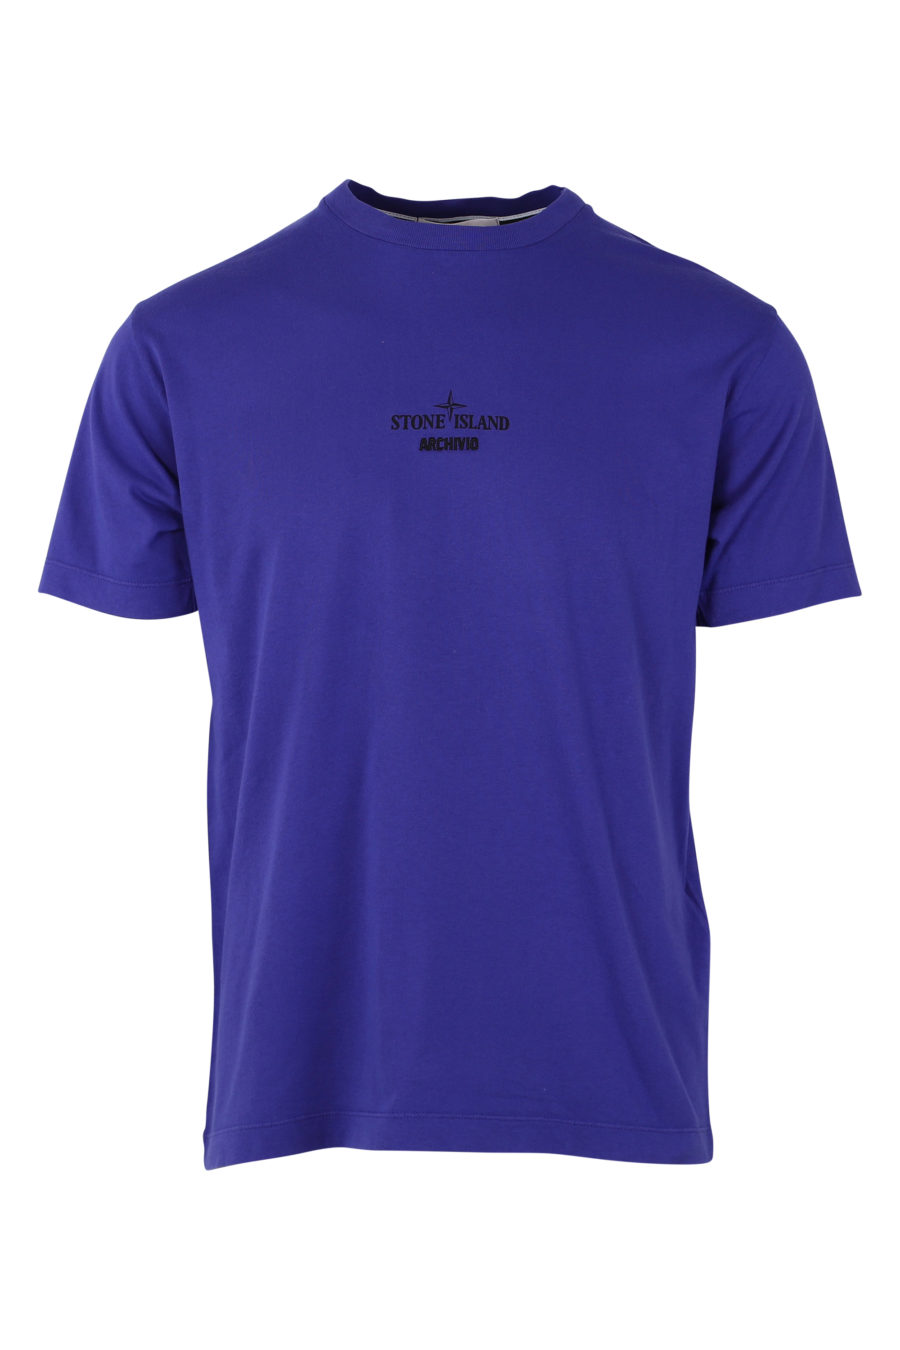 Camiseta azul logo "Archivio" - IMG 9354